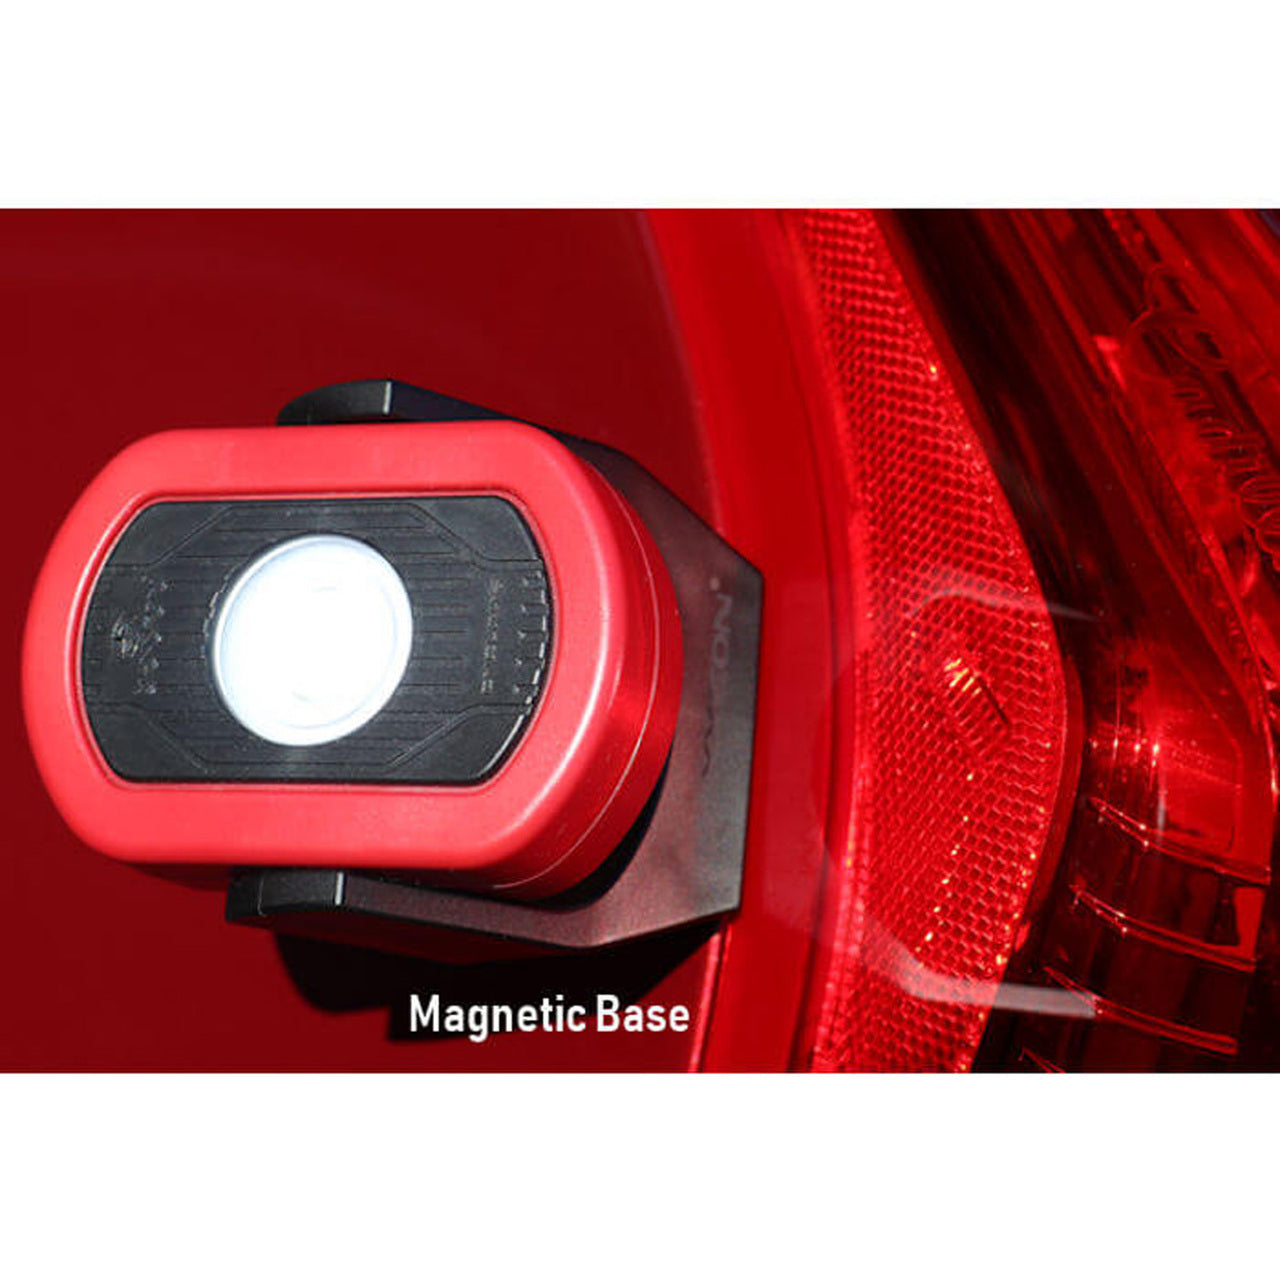 Maxxeon MXN00812, Hivis Yellow, Workstar Cyclops USB Rechargeable LED Worklight - MPR Tools & Equipment